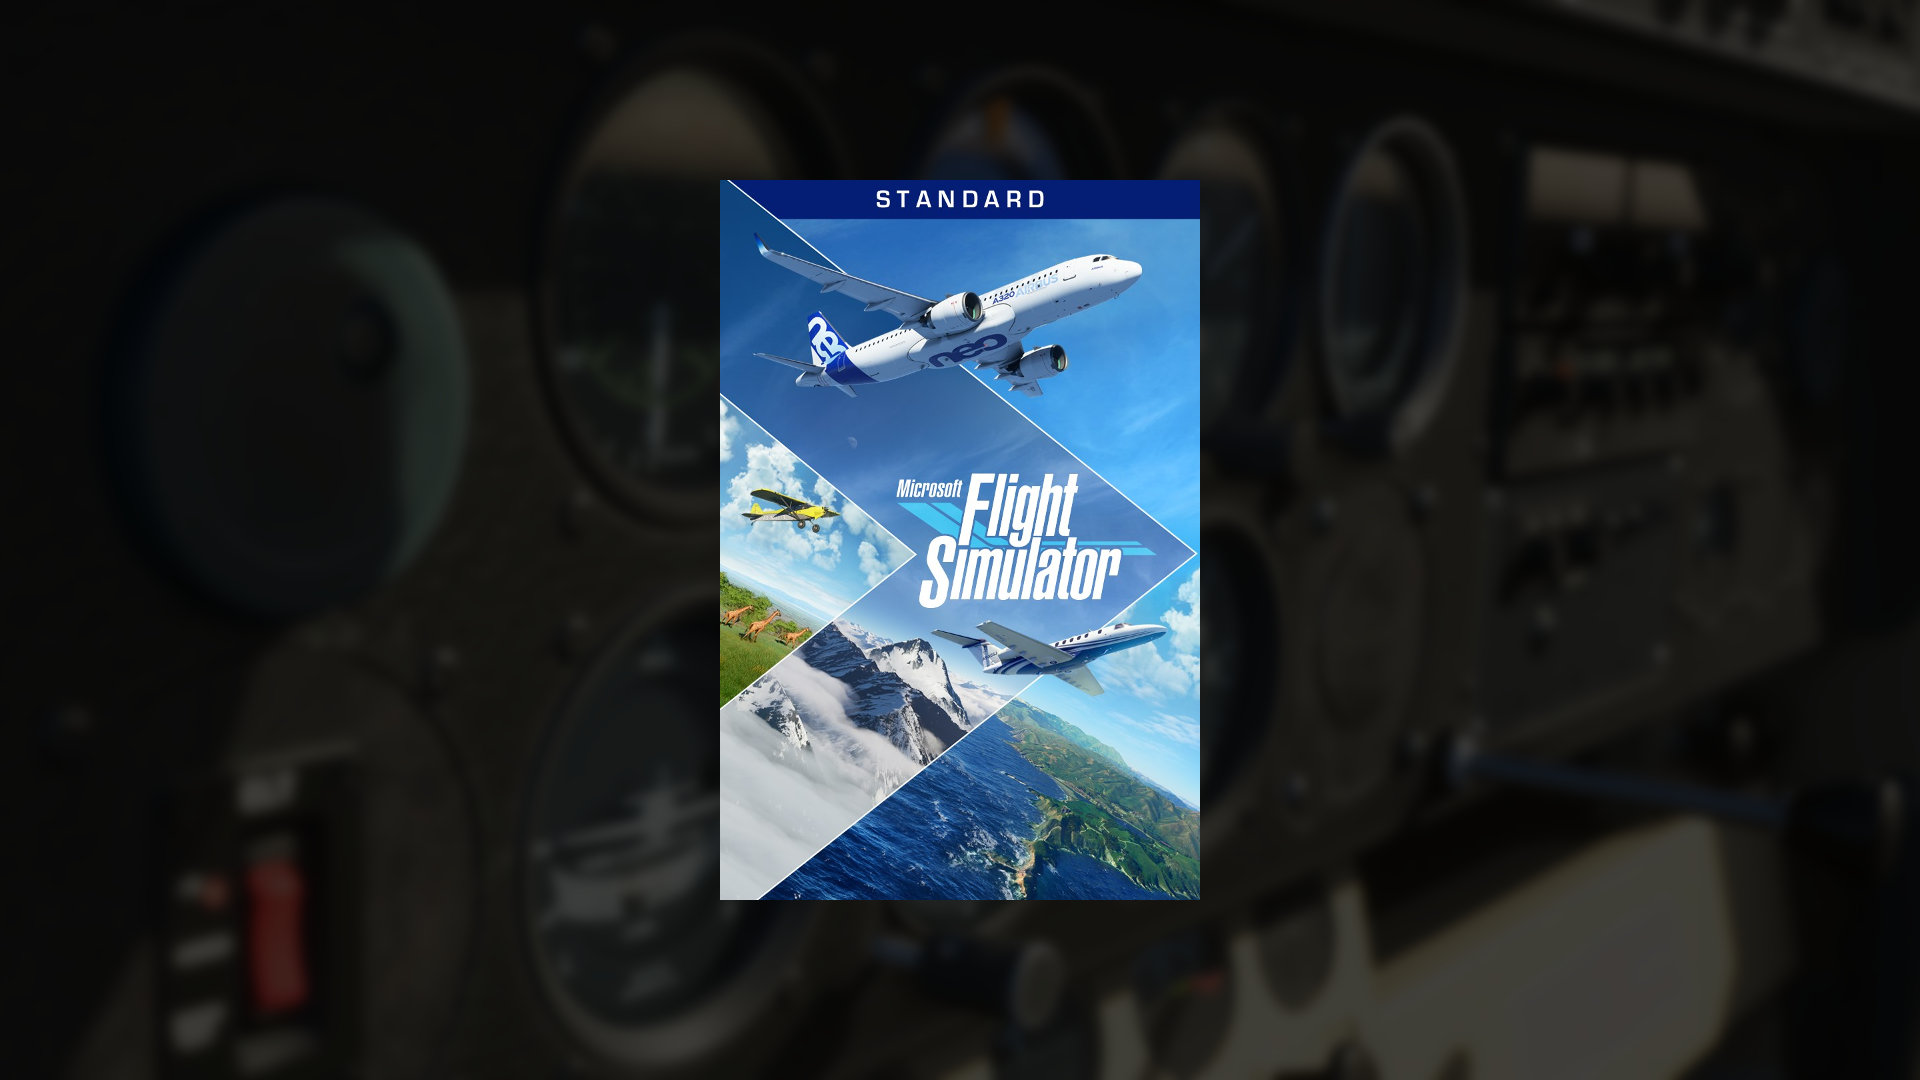 Microsoft Flight Simulator 2020 Standard Edition 